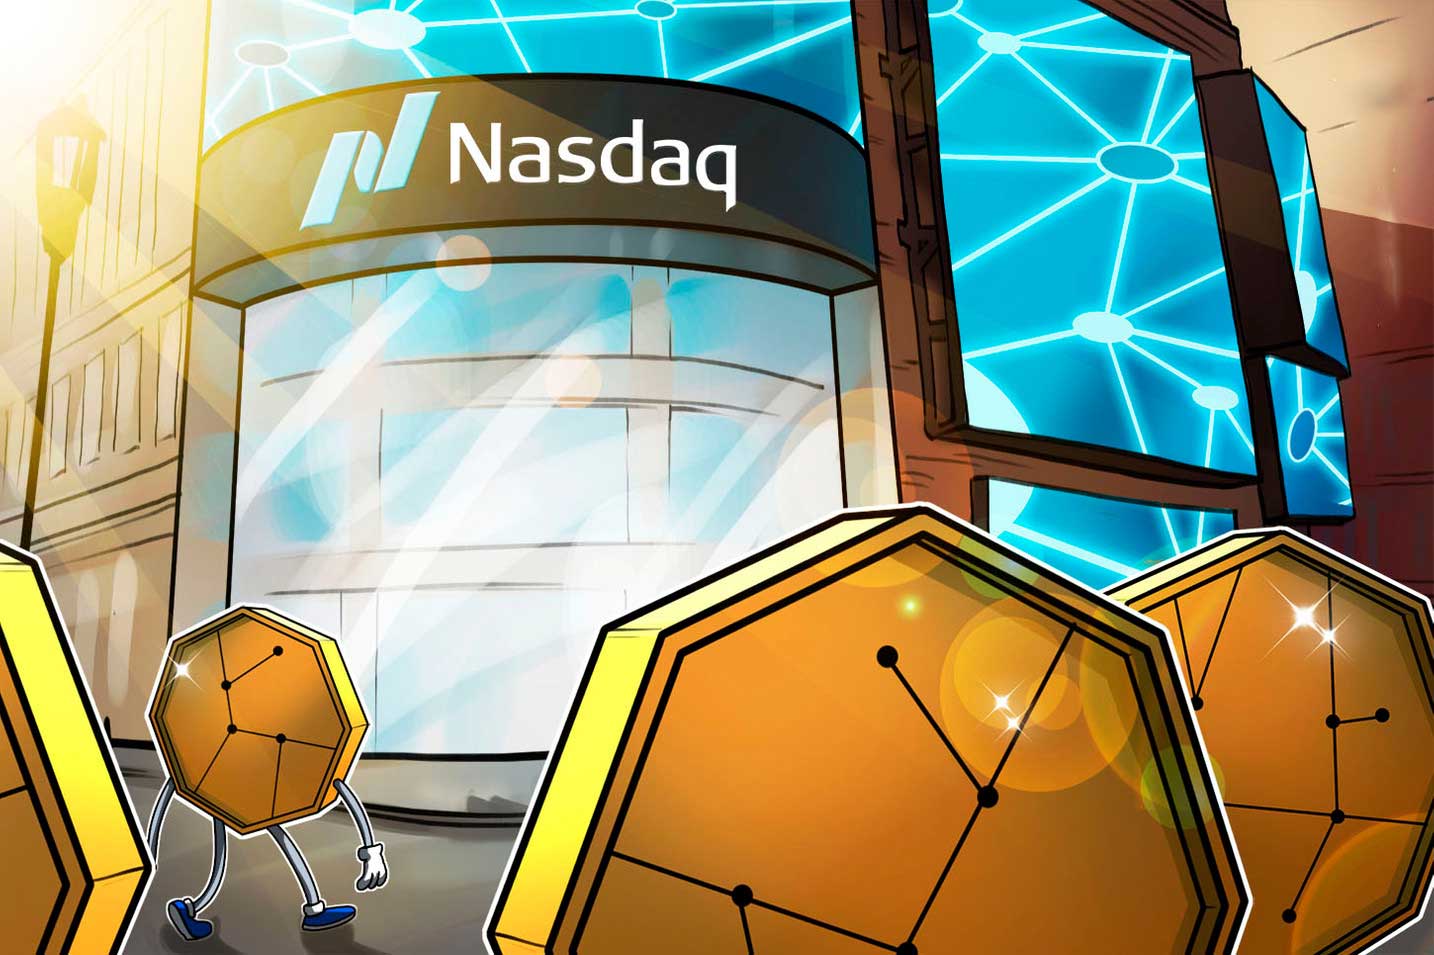 The presence of Nasdaq in the crypto market